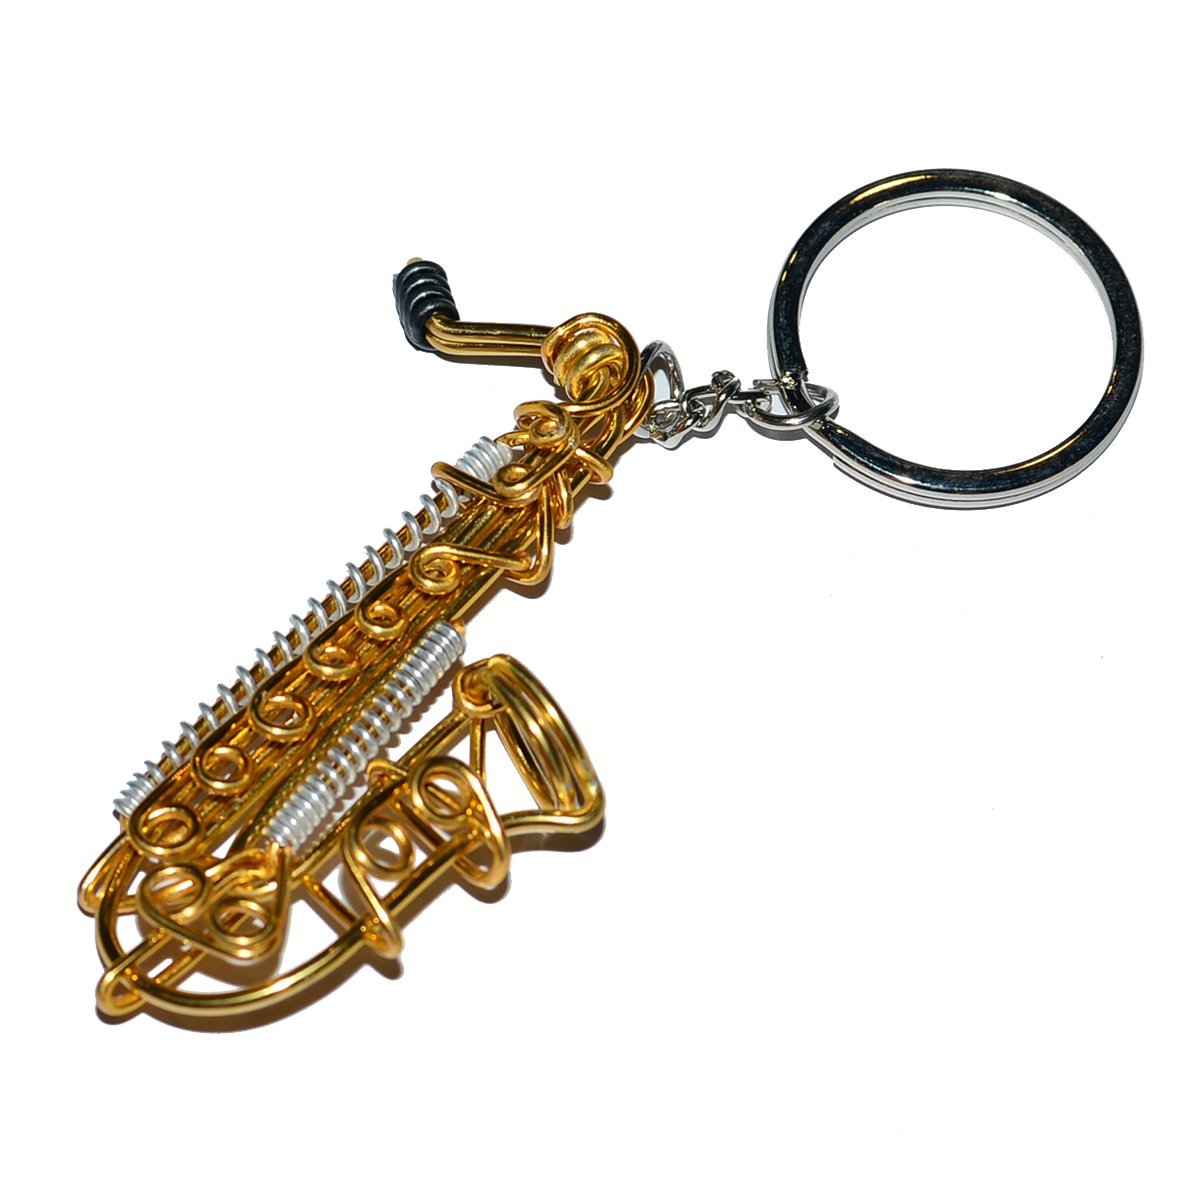 Wire Art Walker - Tenor Saxophone Keychain-Accessories-Wire Art Walker-Music Elements